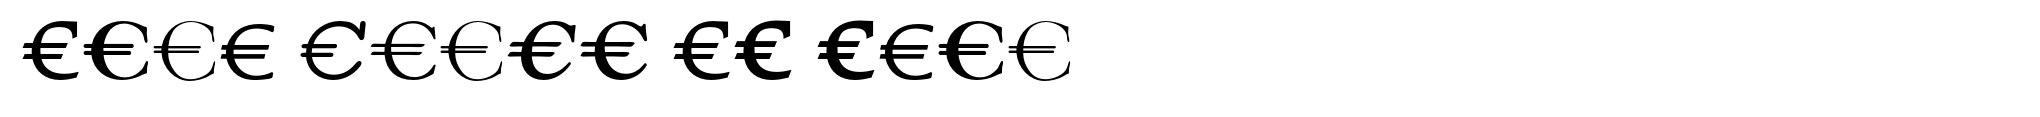 Euro Serif EF Four image